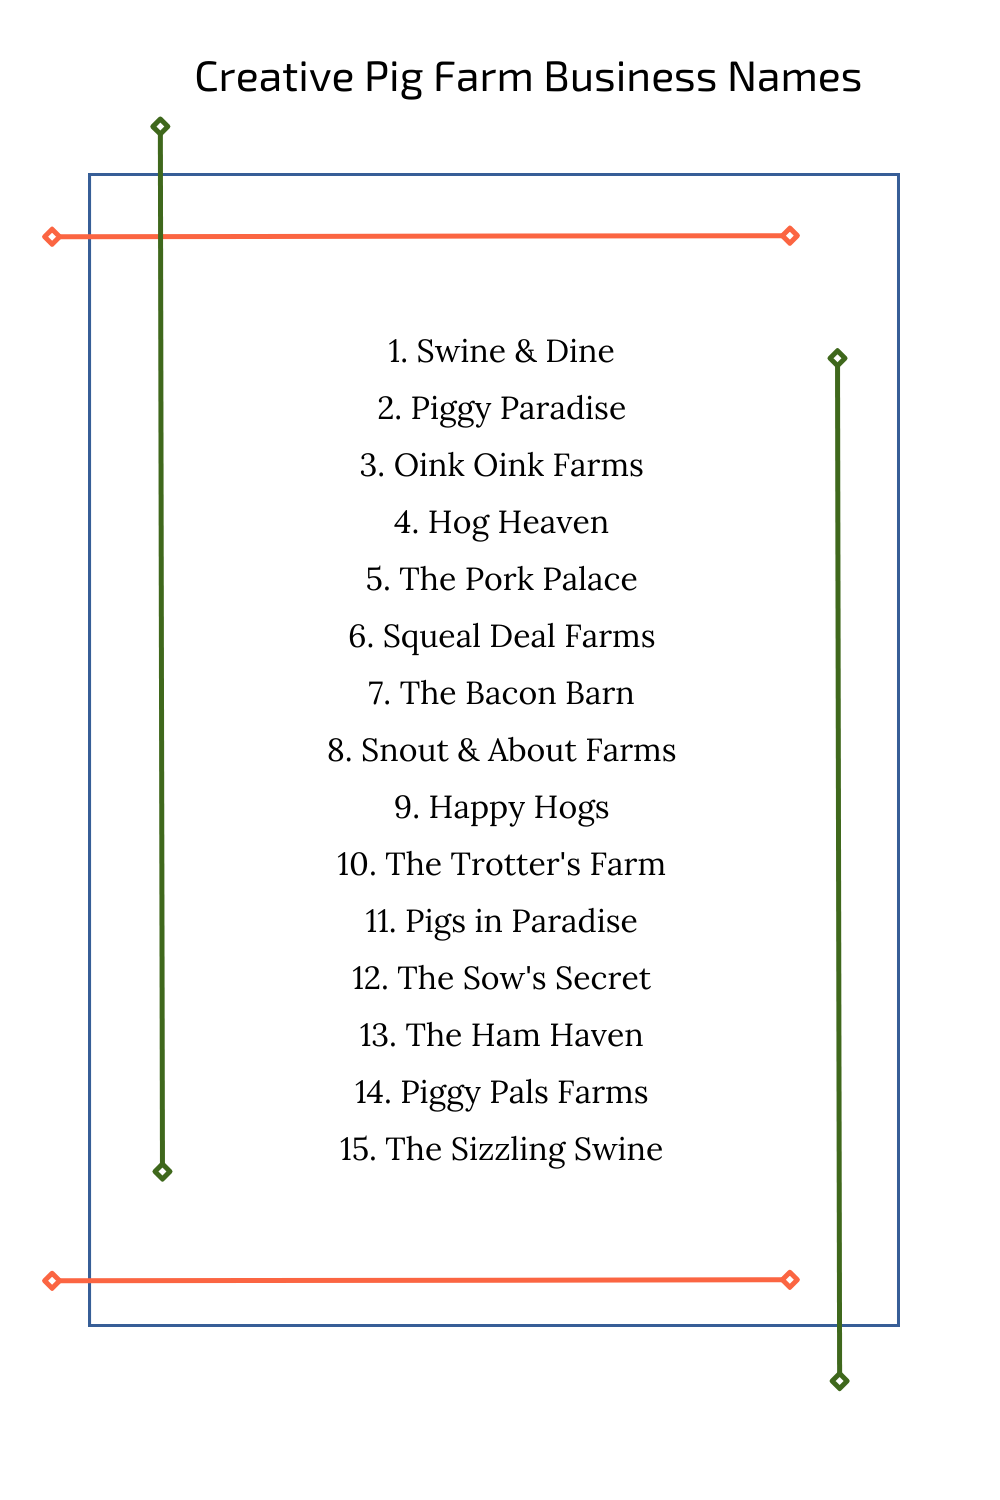 Creative Pig Farm Business Names